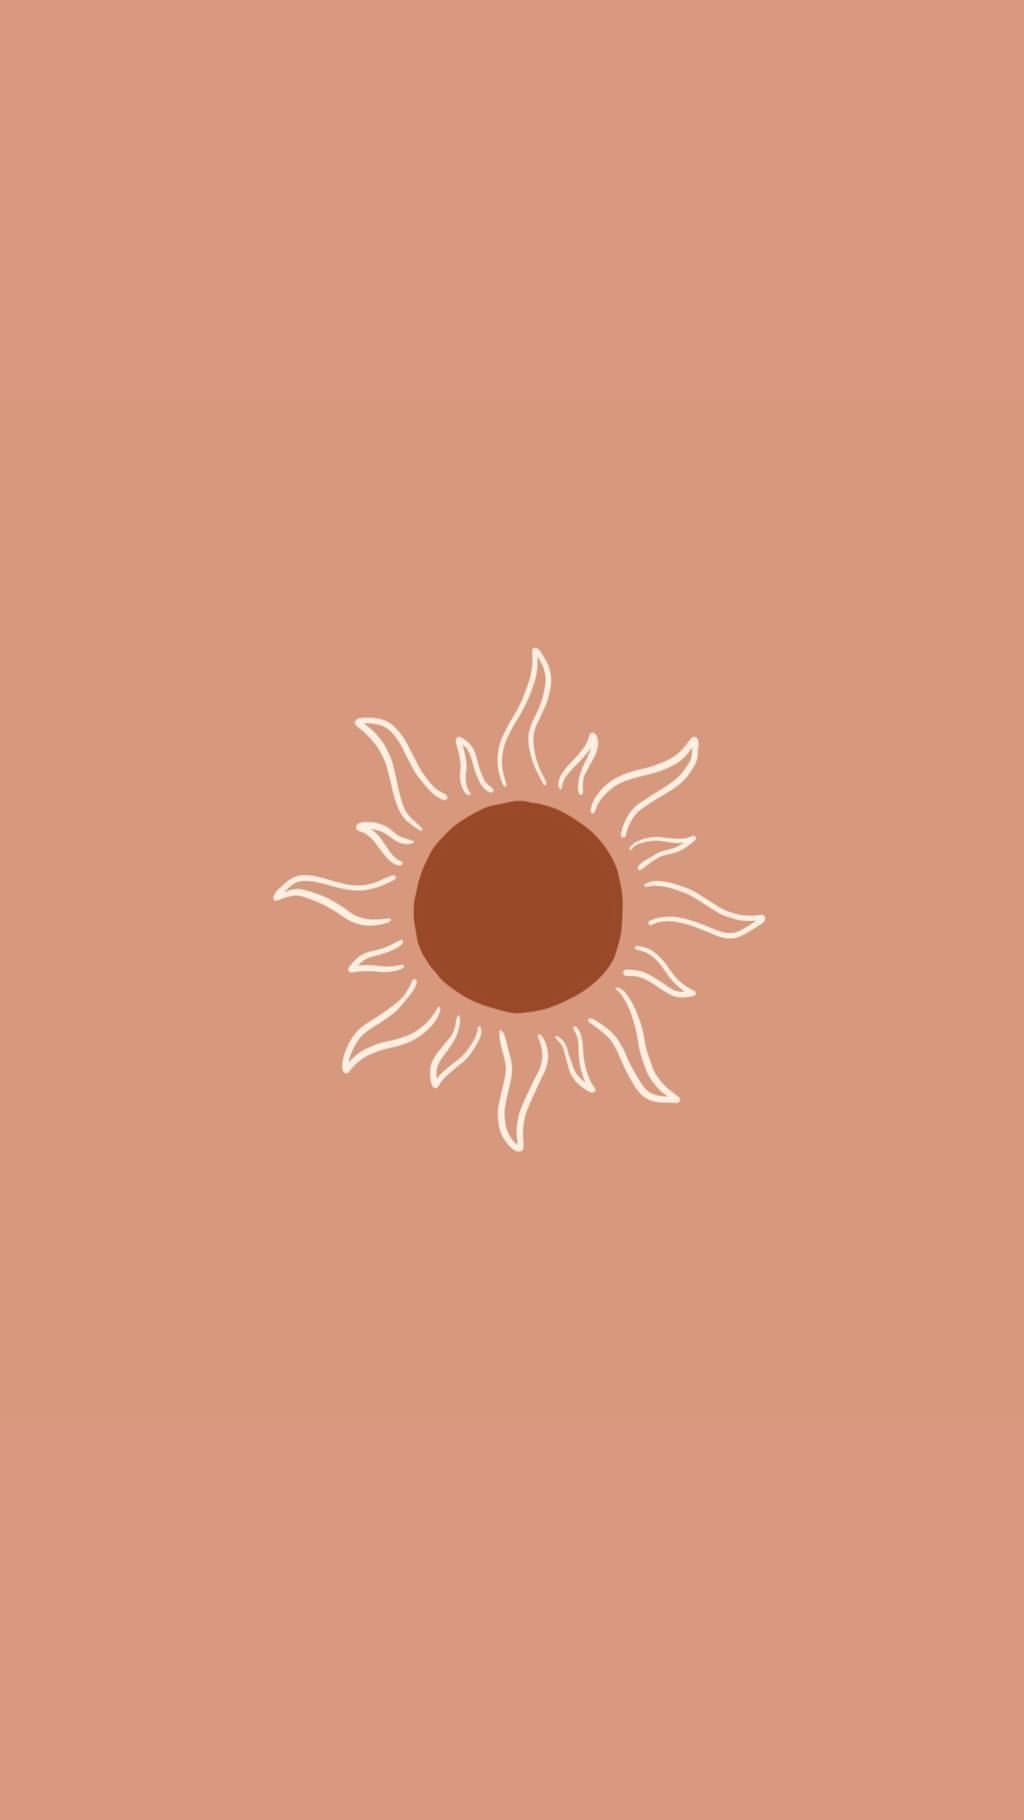 A minimalist sun illustration on a terracotta background - Boho